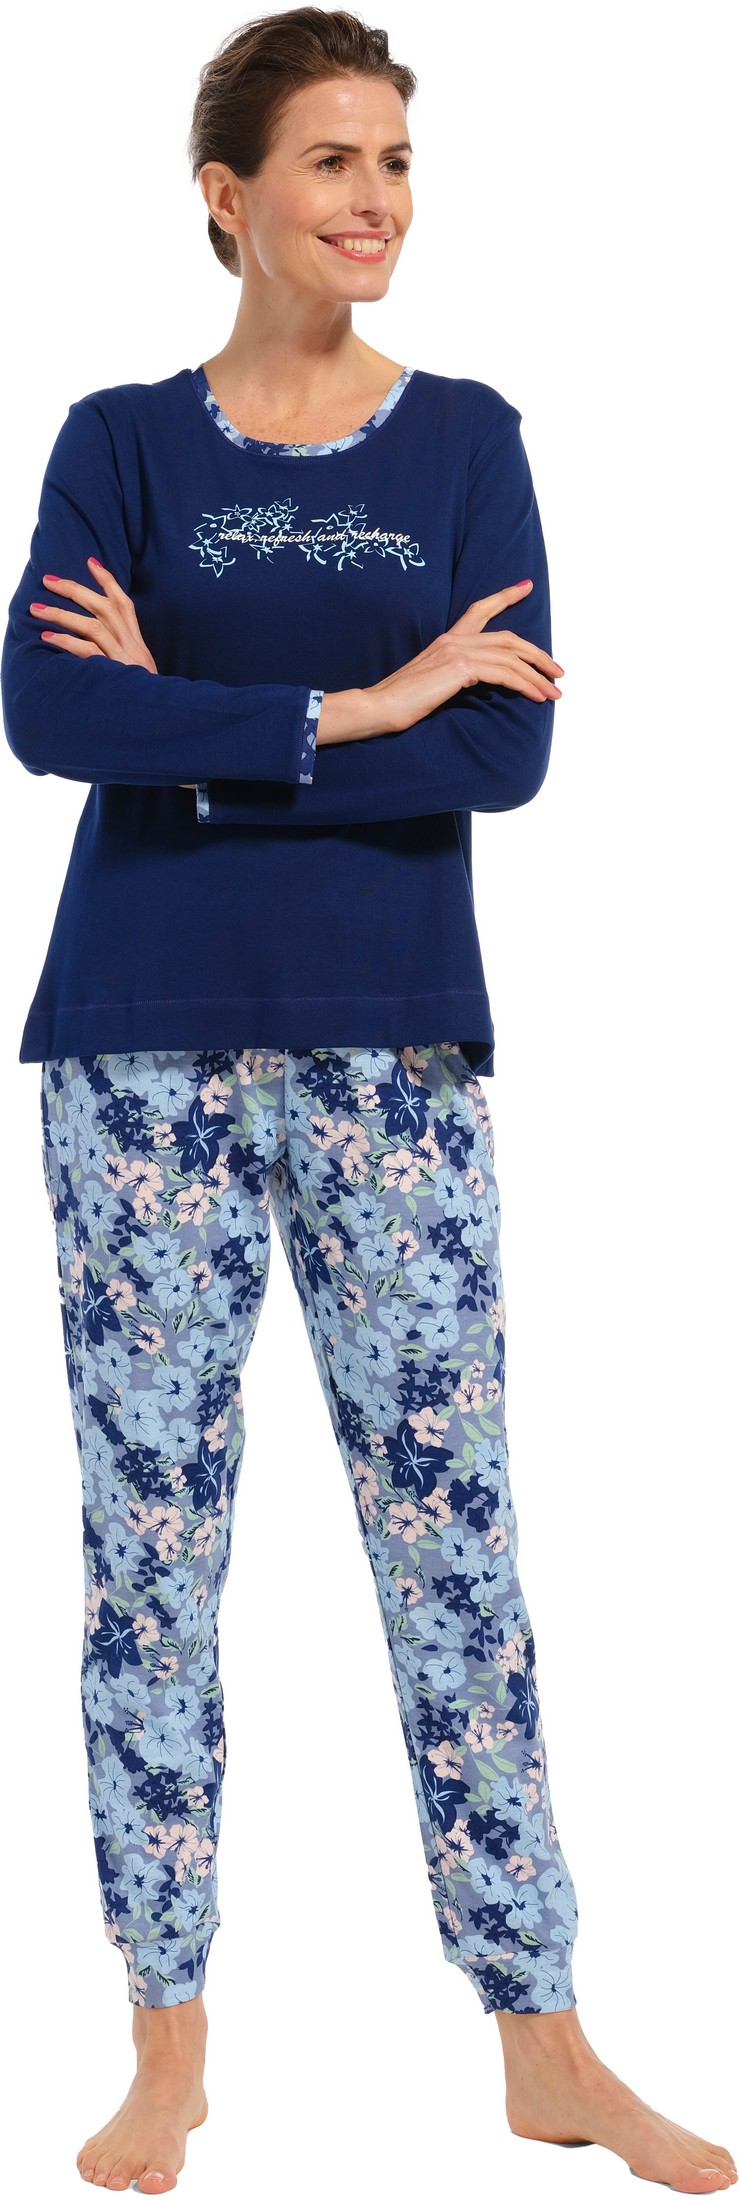 Pastunette dames pyjama 20232-130-3 - Blauw - 40